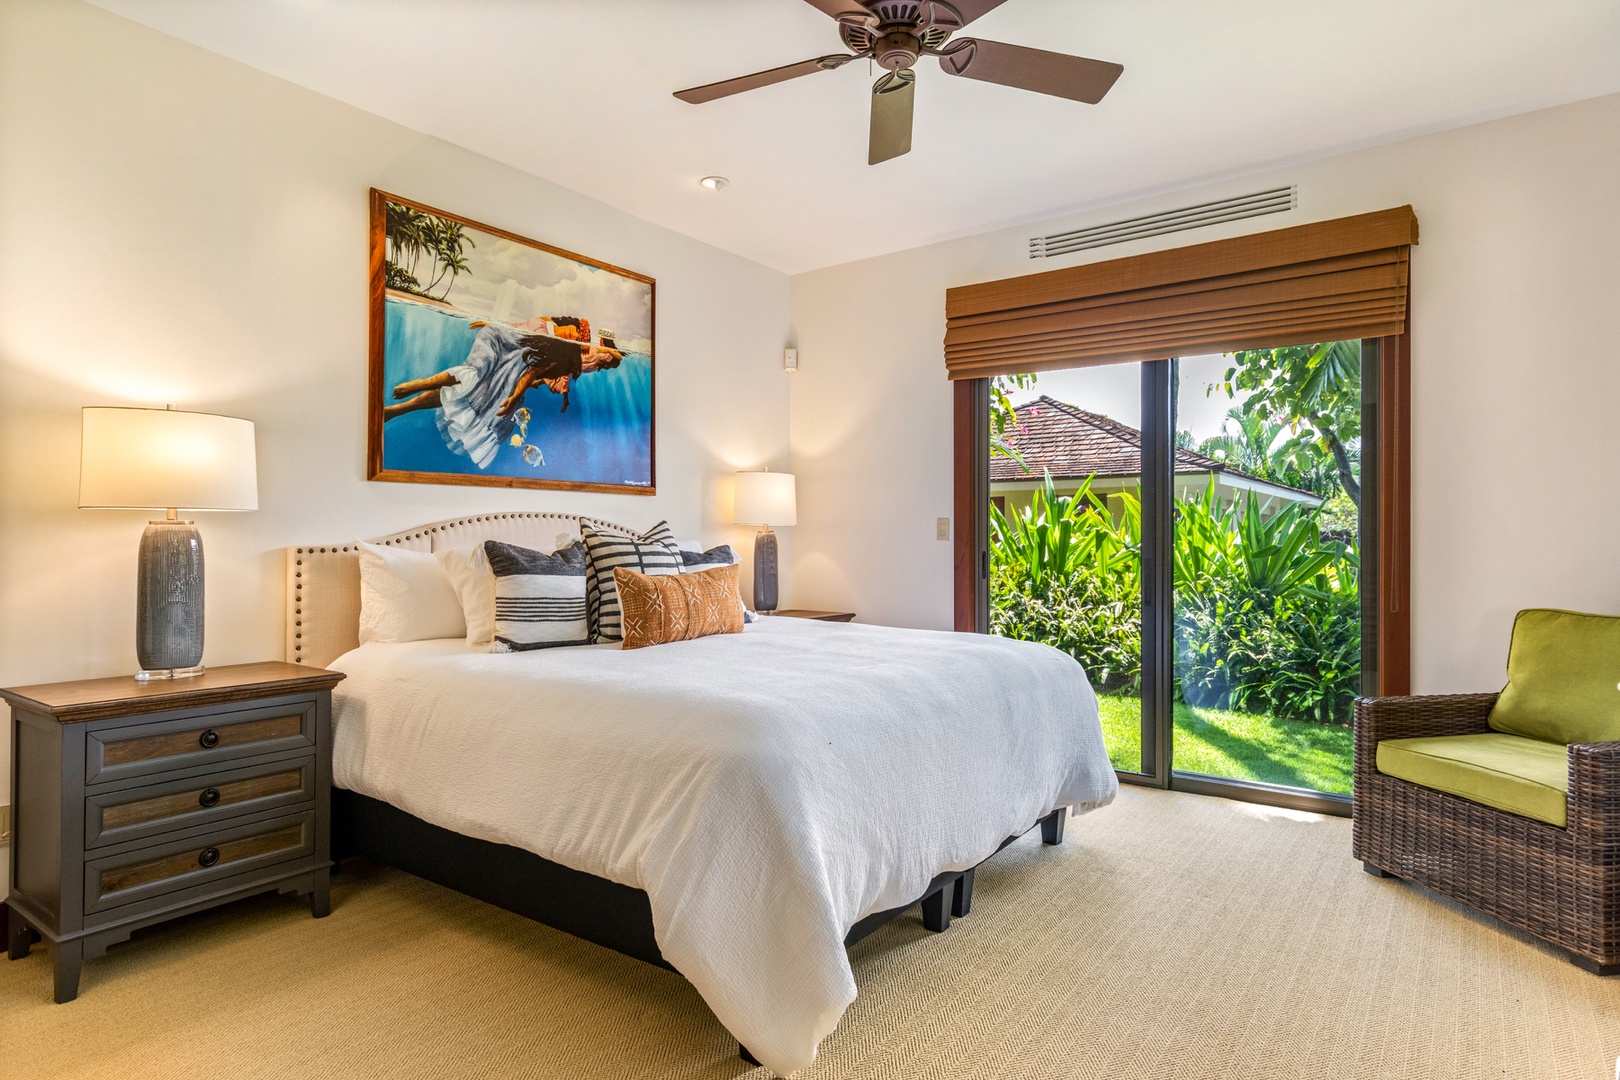 Kailua Kona Vacation Rentals, 3BD Hainoa Villa (2907C) at Four Seasons Resort at Hualalai - Second guest room with outdoor access, flat screen TV and ensuite full bath.